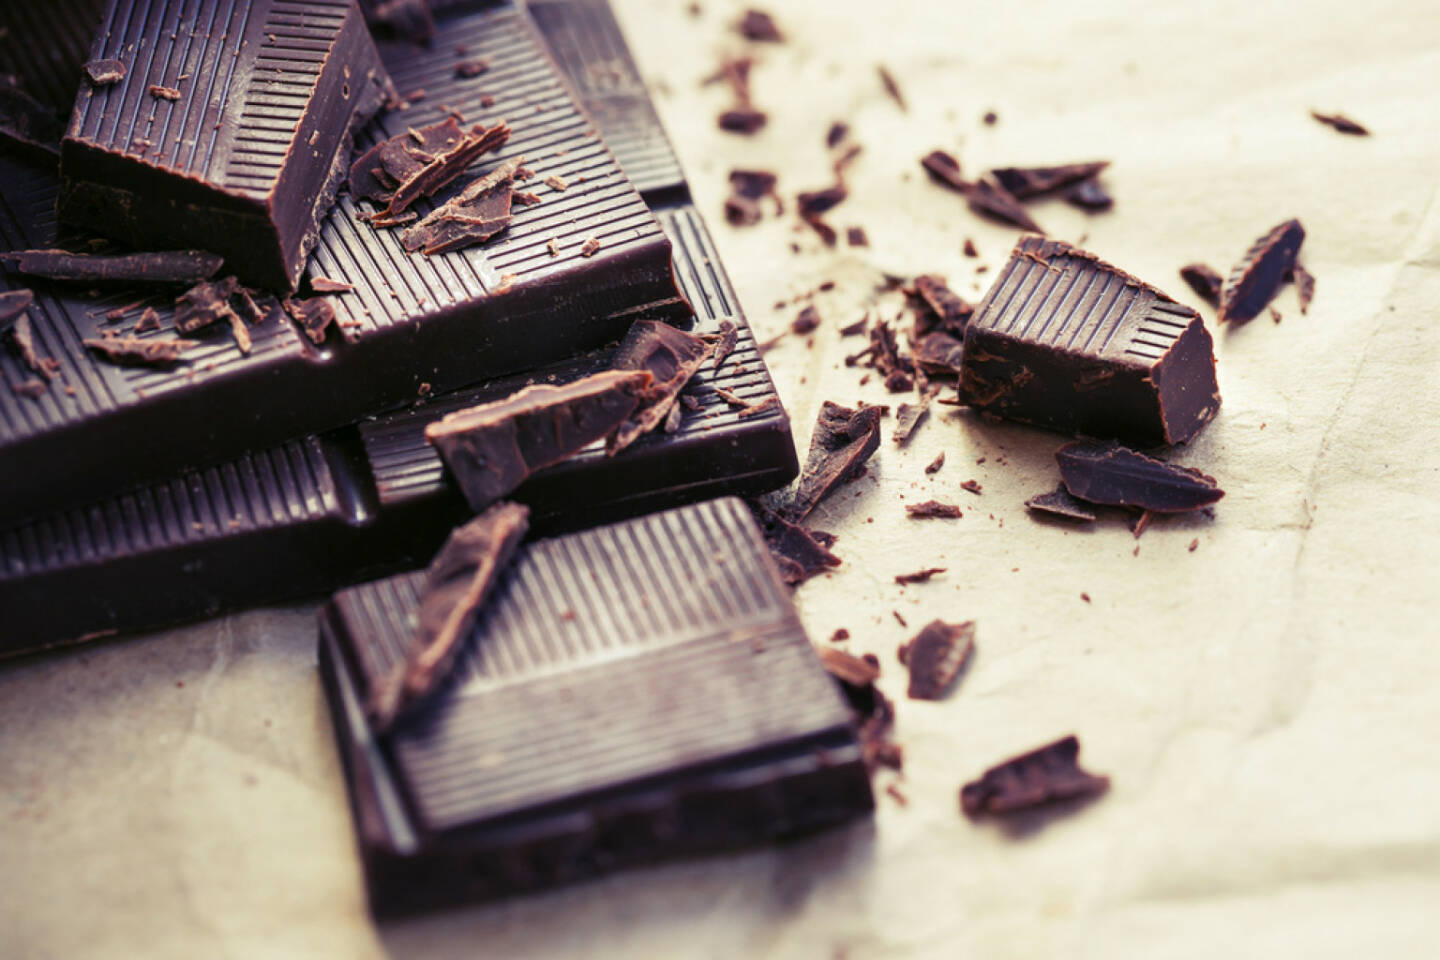 Schokolade, Kakao, food, süß, dunkel, Versuchung, http://www.shutterstock.com/de/pic-184667783/stock-photo-chocolate-pieces-chopped-dark-chocolate-closeup.html 